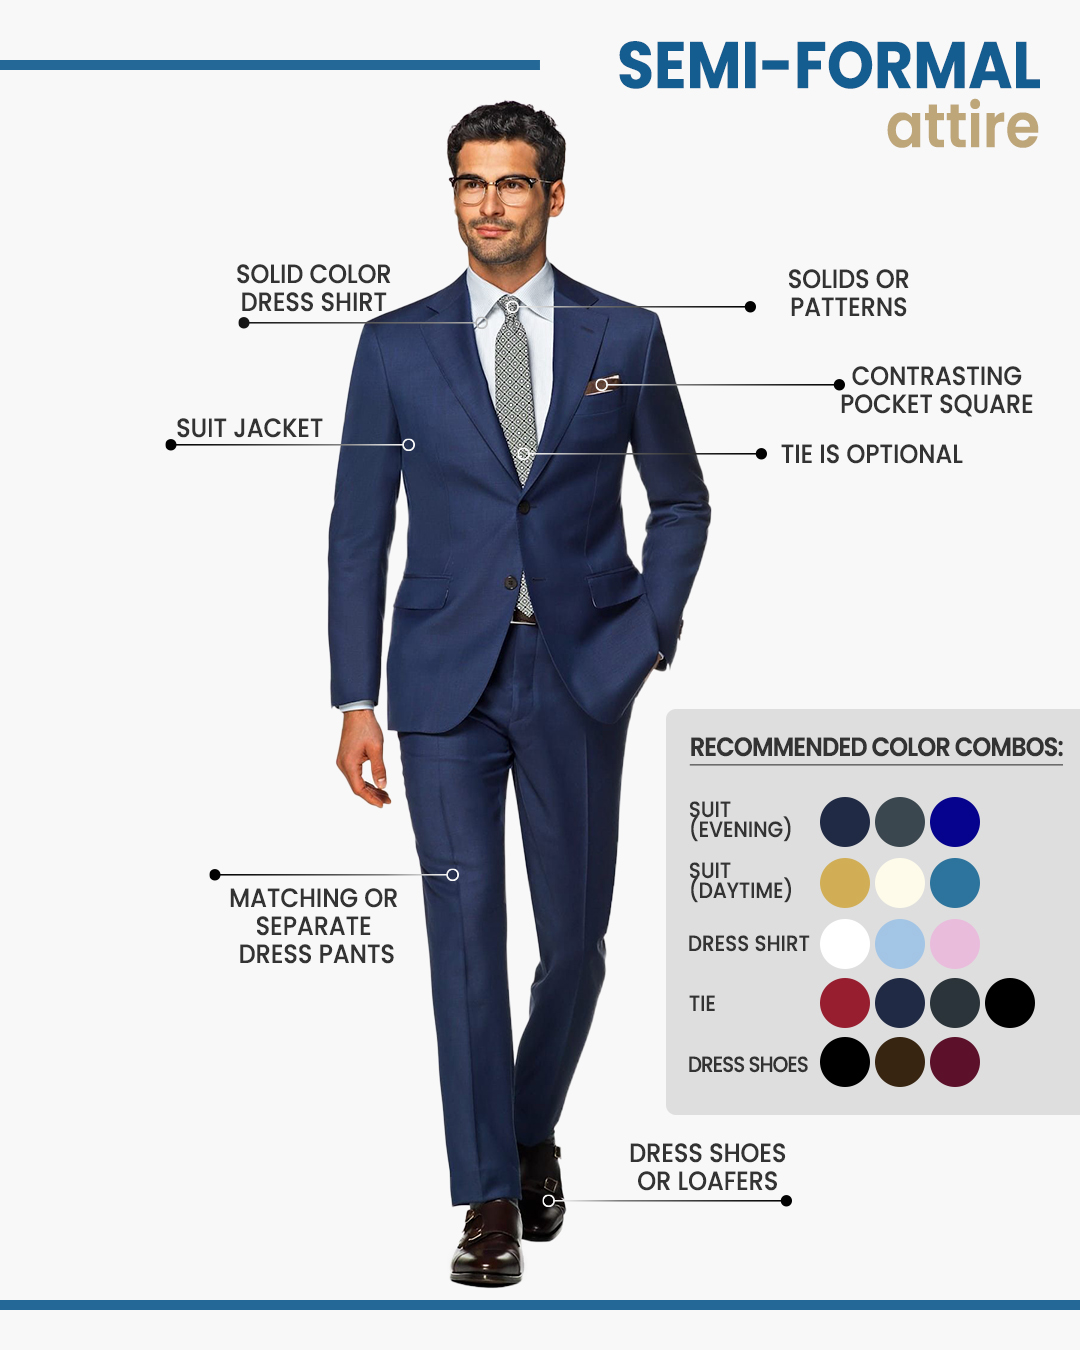 semi-formal dress code attire for men